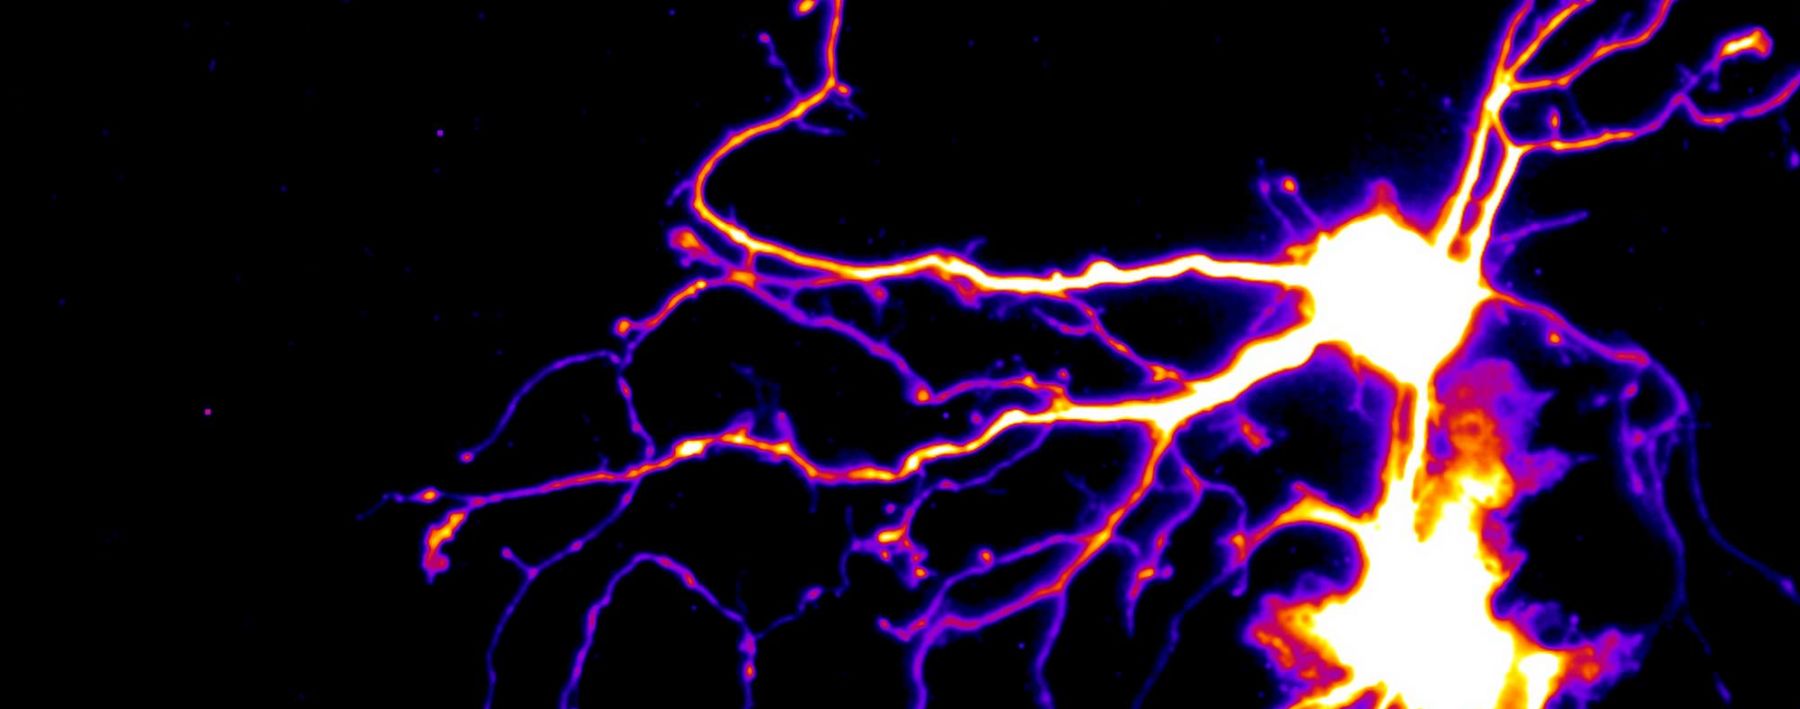 A neuron and glia expressing a photo-convertible protein, Dendra2.